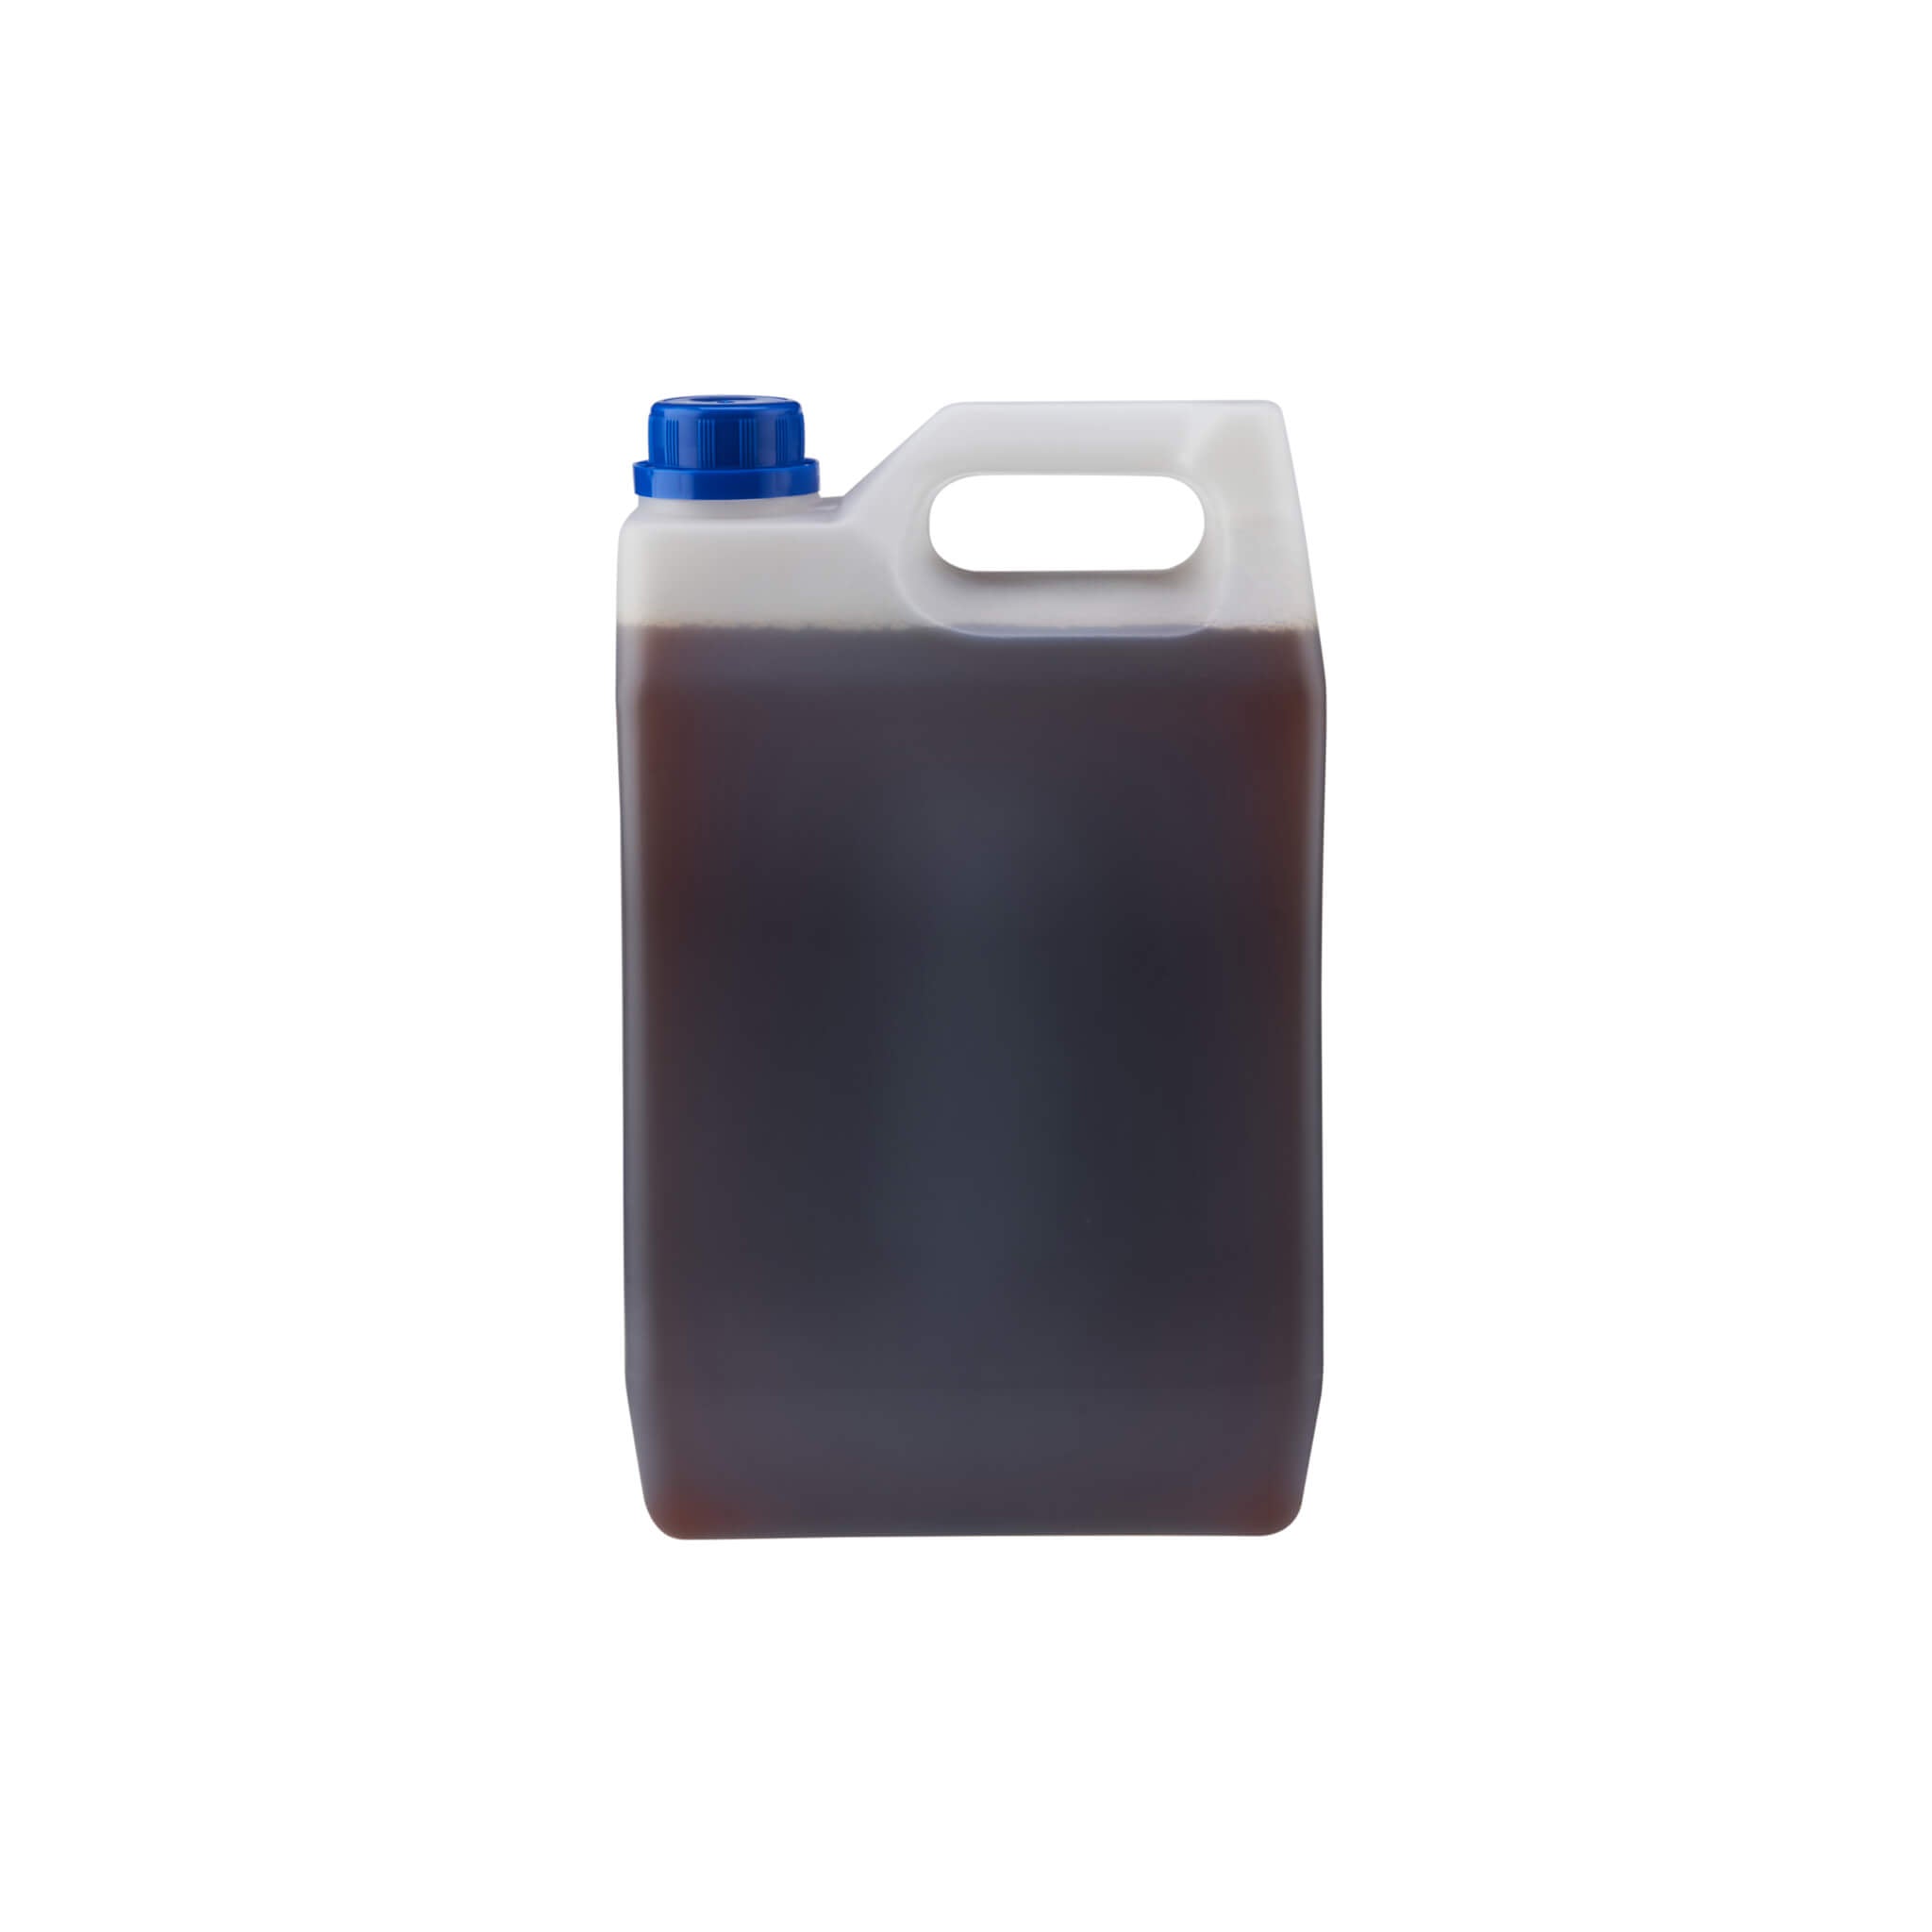 Antiseptic Disinfectant 5 Liter - Hotpack Global